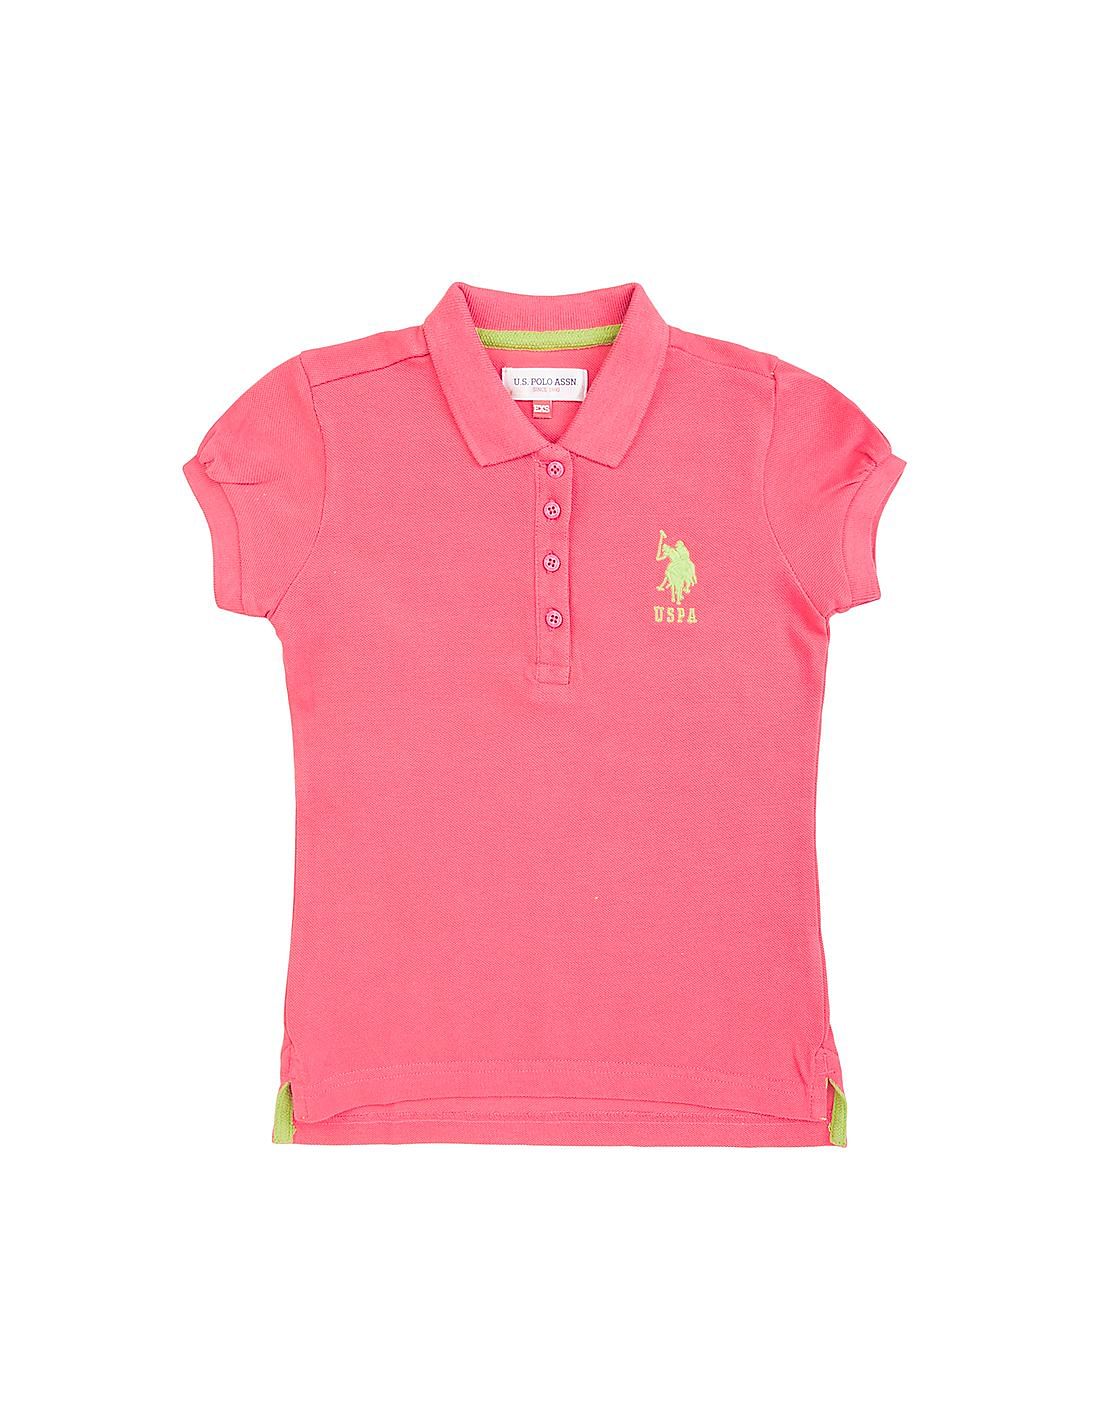 Buy U.S. Polo Assn. Kids Girls Girls Solid Pique Polo Shirt - NNNOW.com